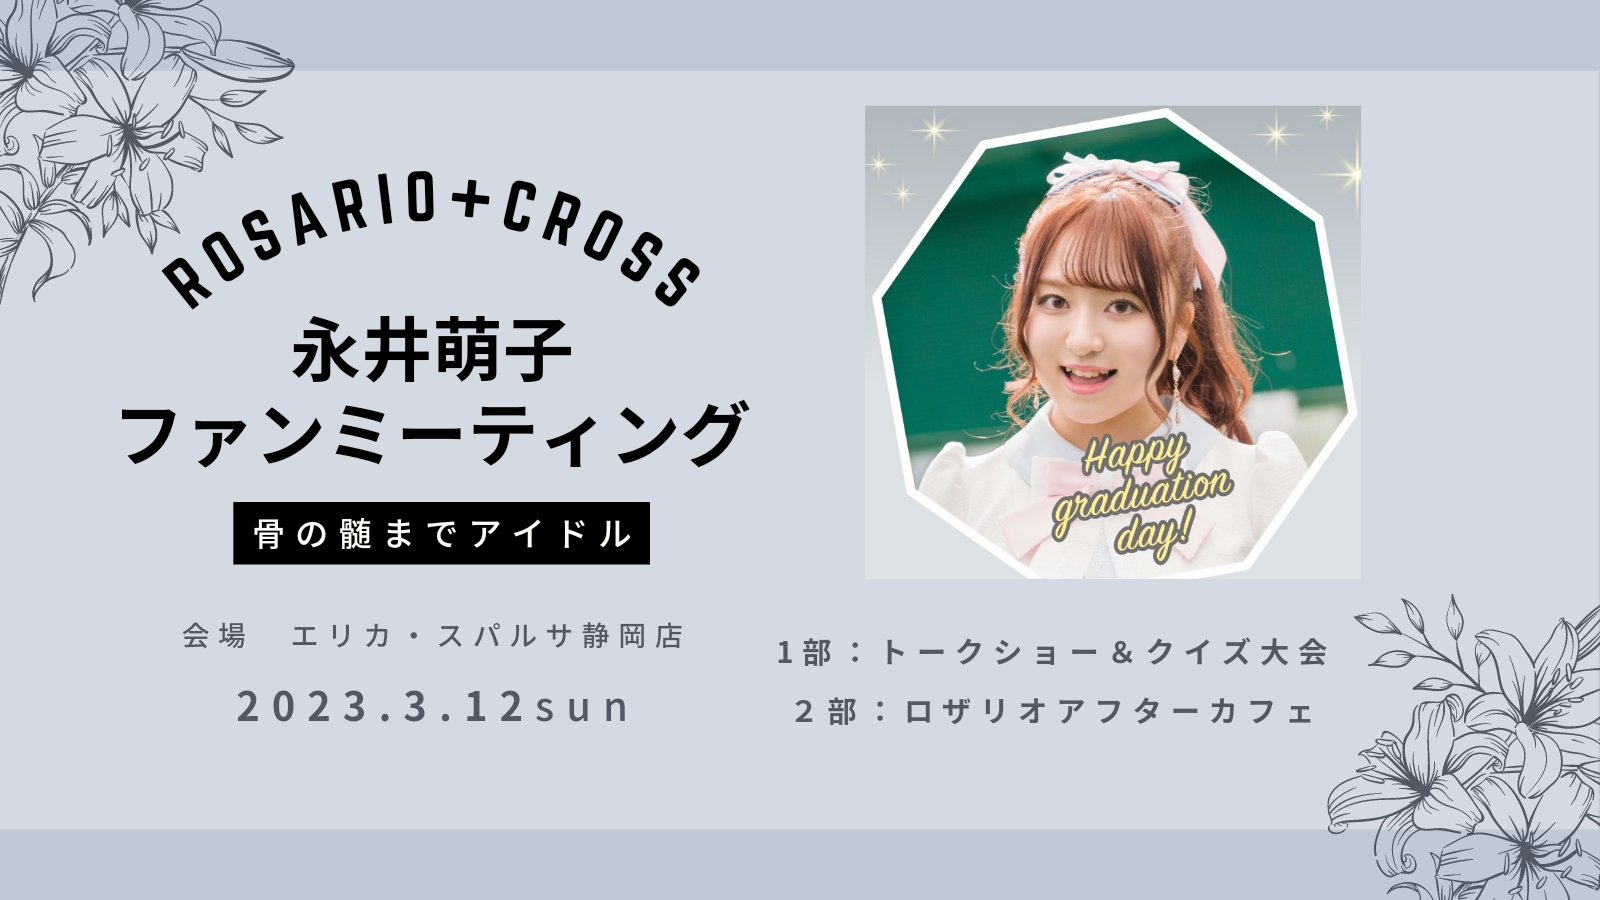 ROSARIO+CROSS 永井萌子 ファンミーティング1